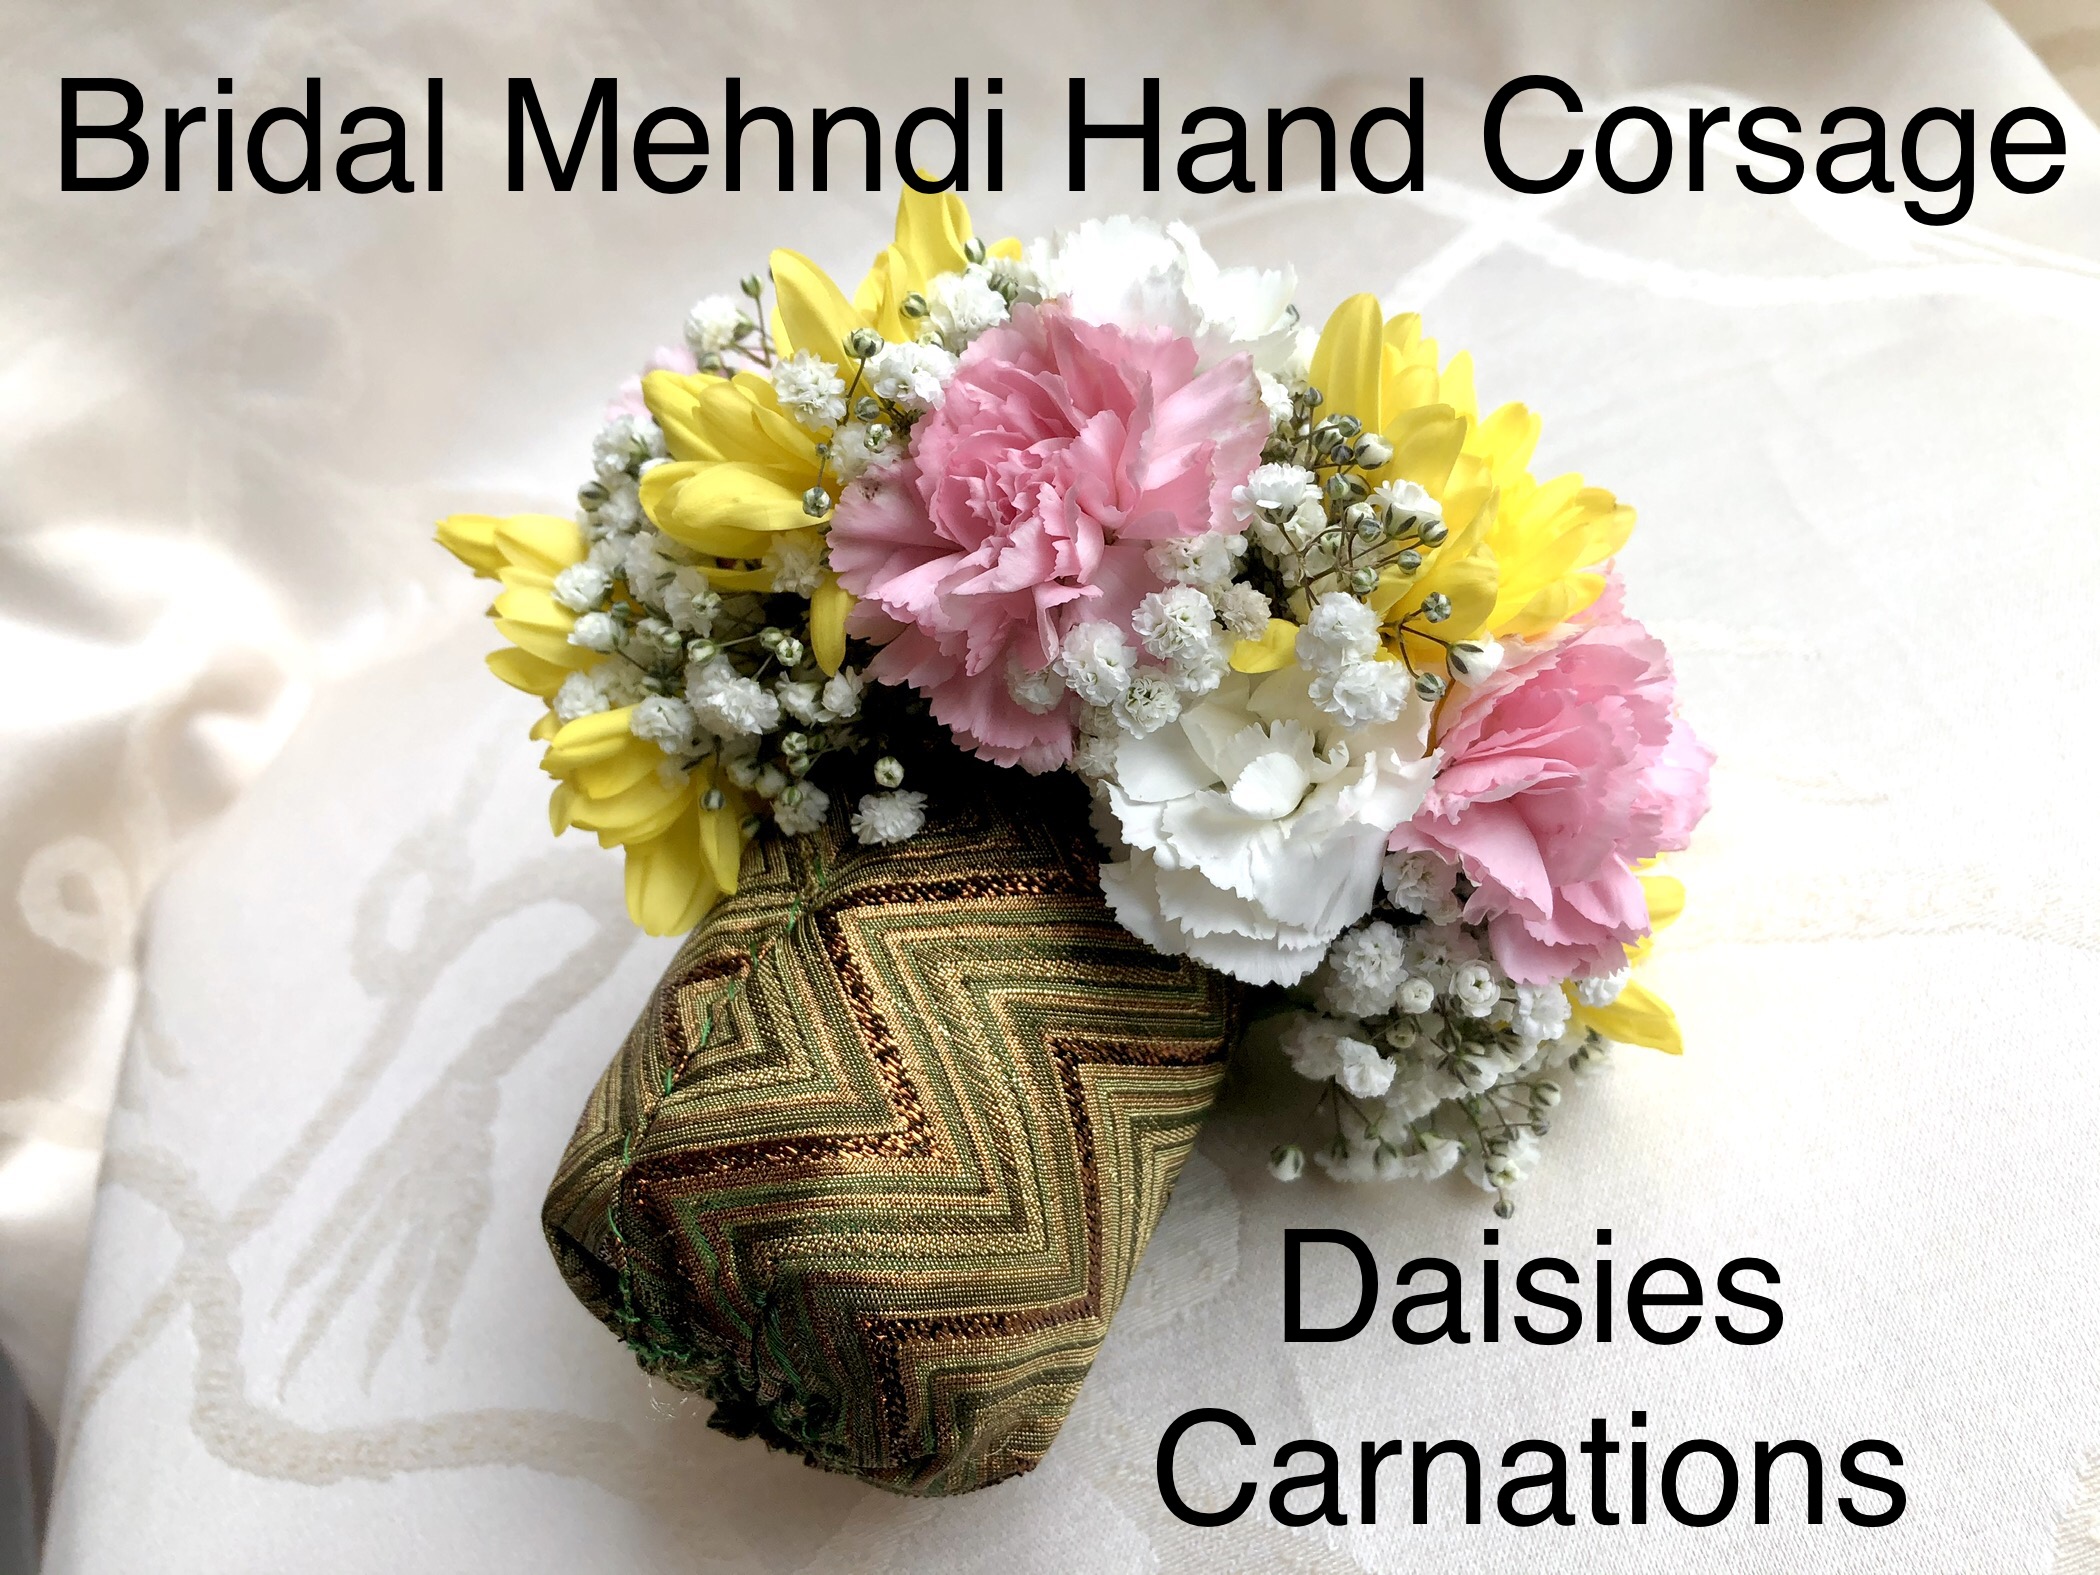 $25 each  - Bridal mehndi Hand corsage daisies and carnations                                       